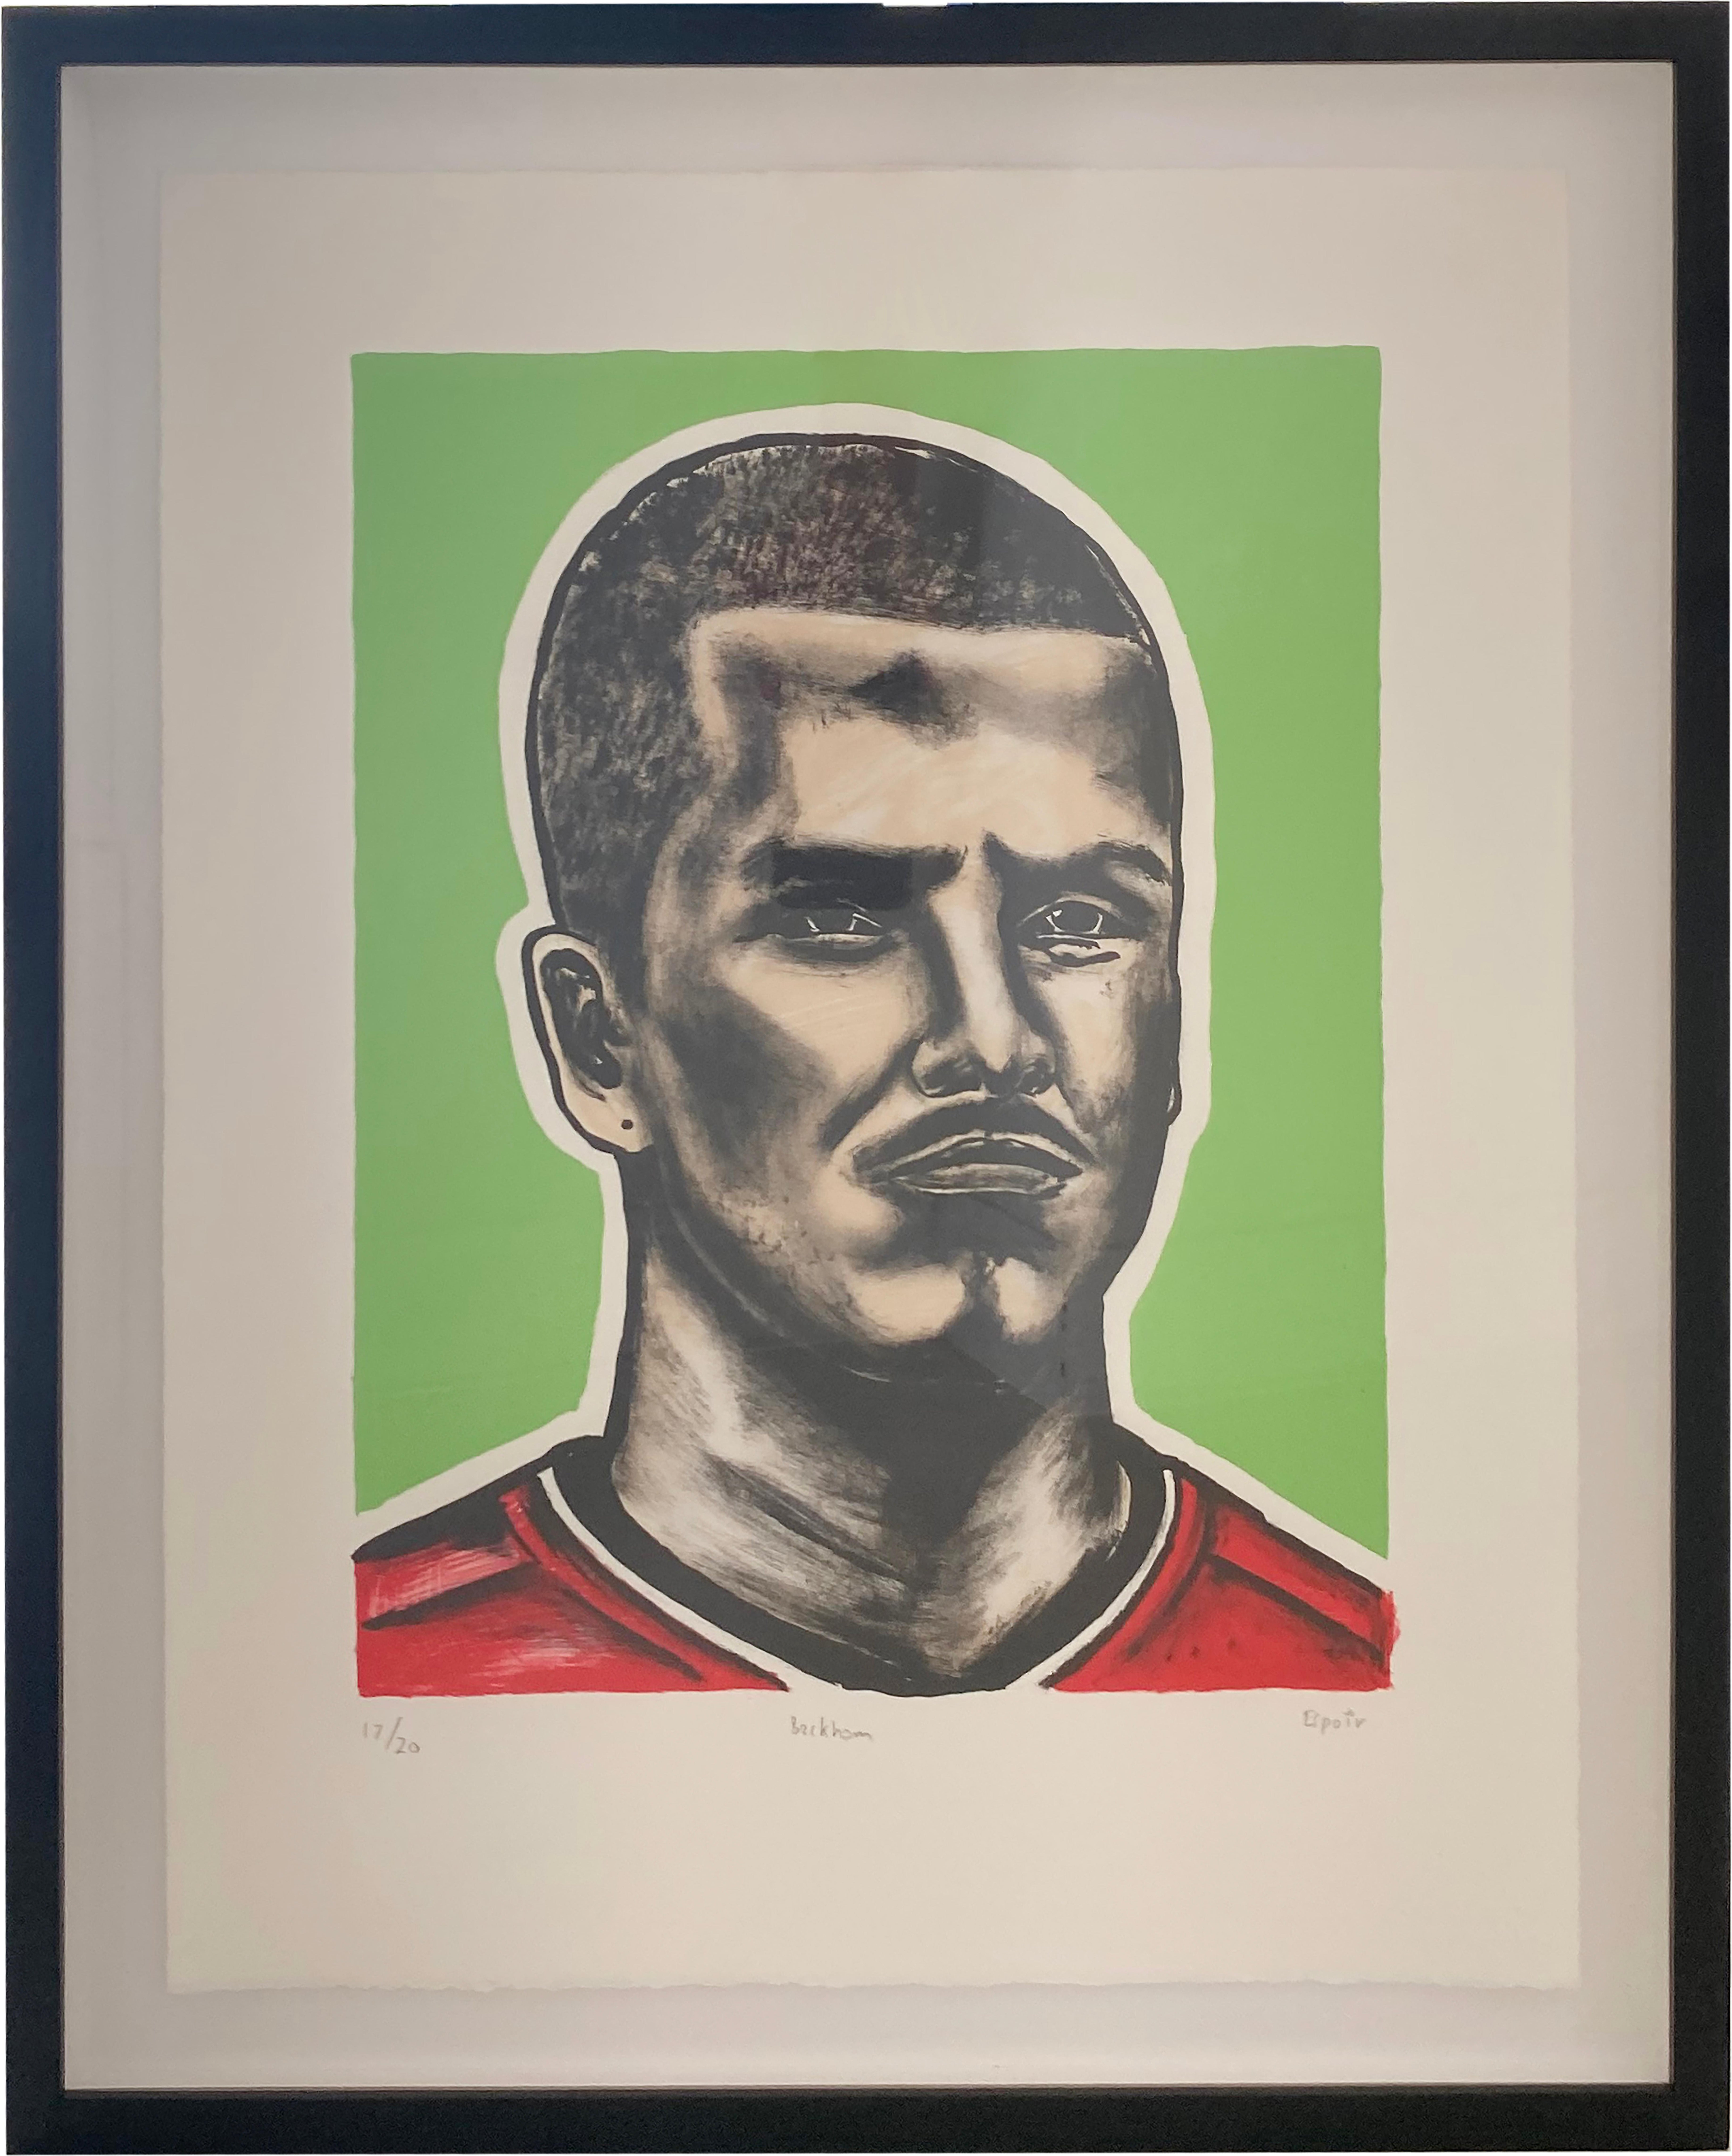 David Beckham Portrait, hand printed lithograph 